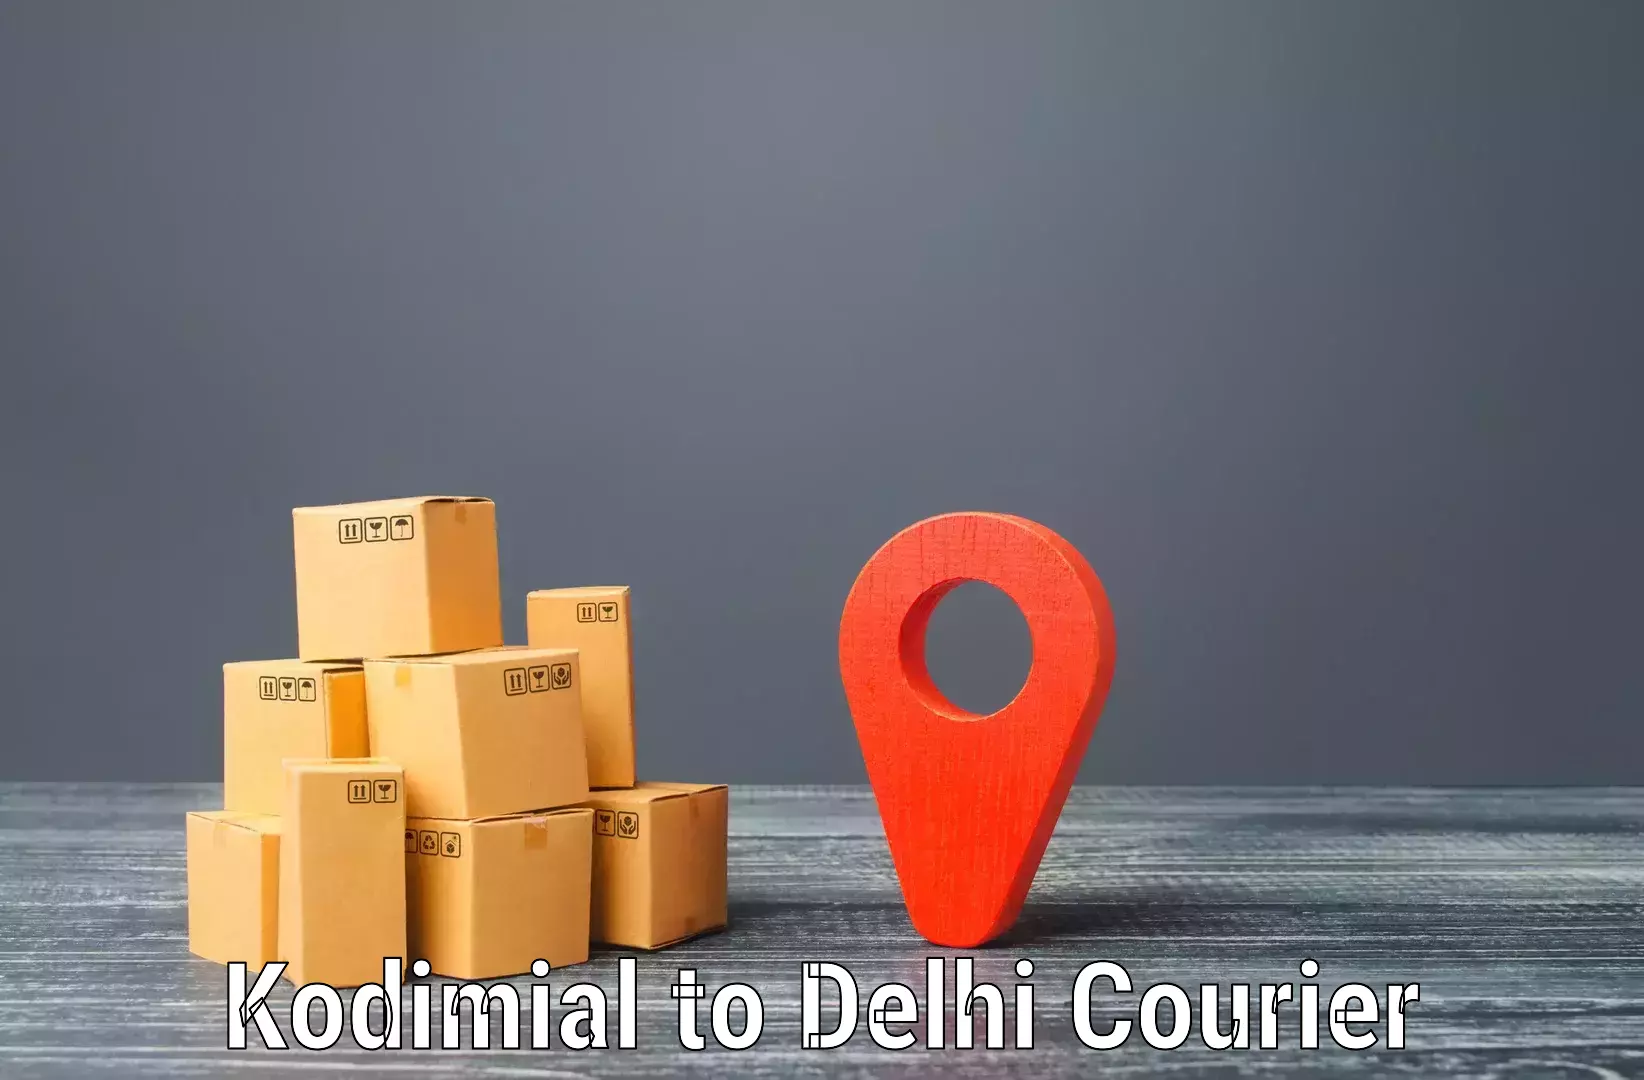 Express delivery capabilities Kodimial to University of Delhi